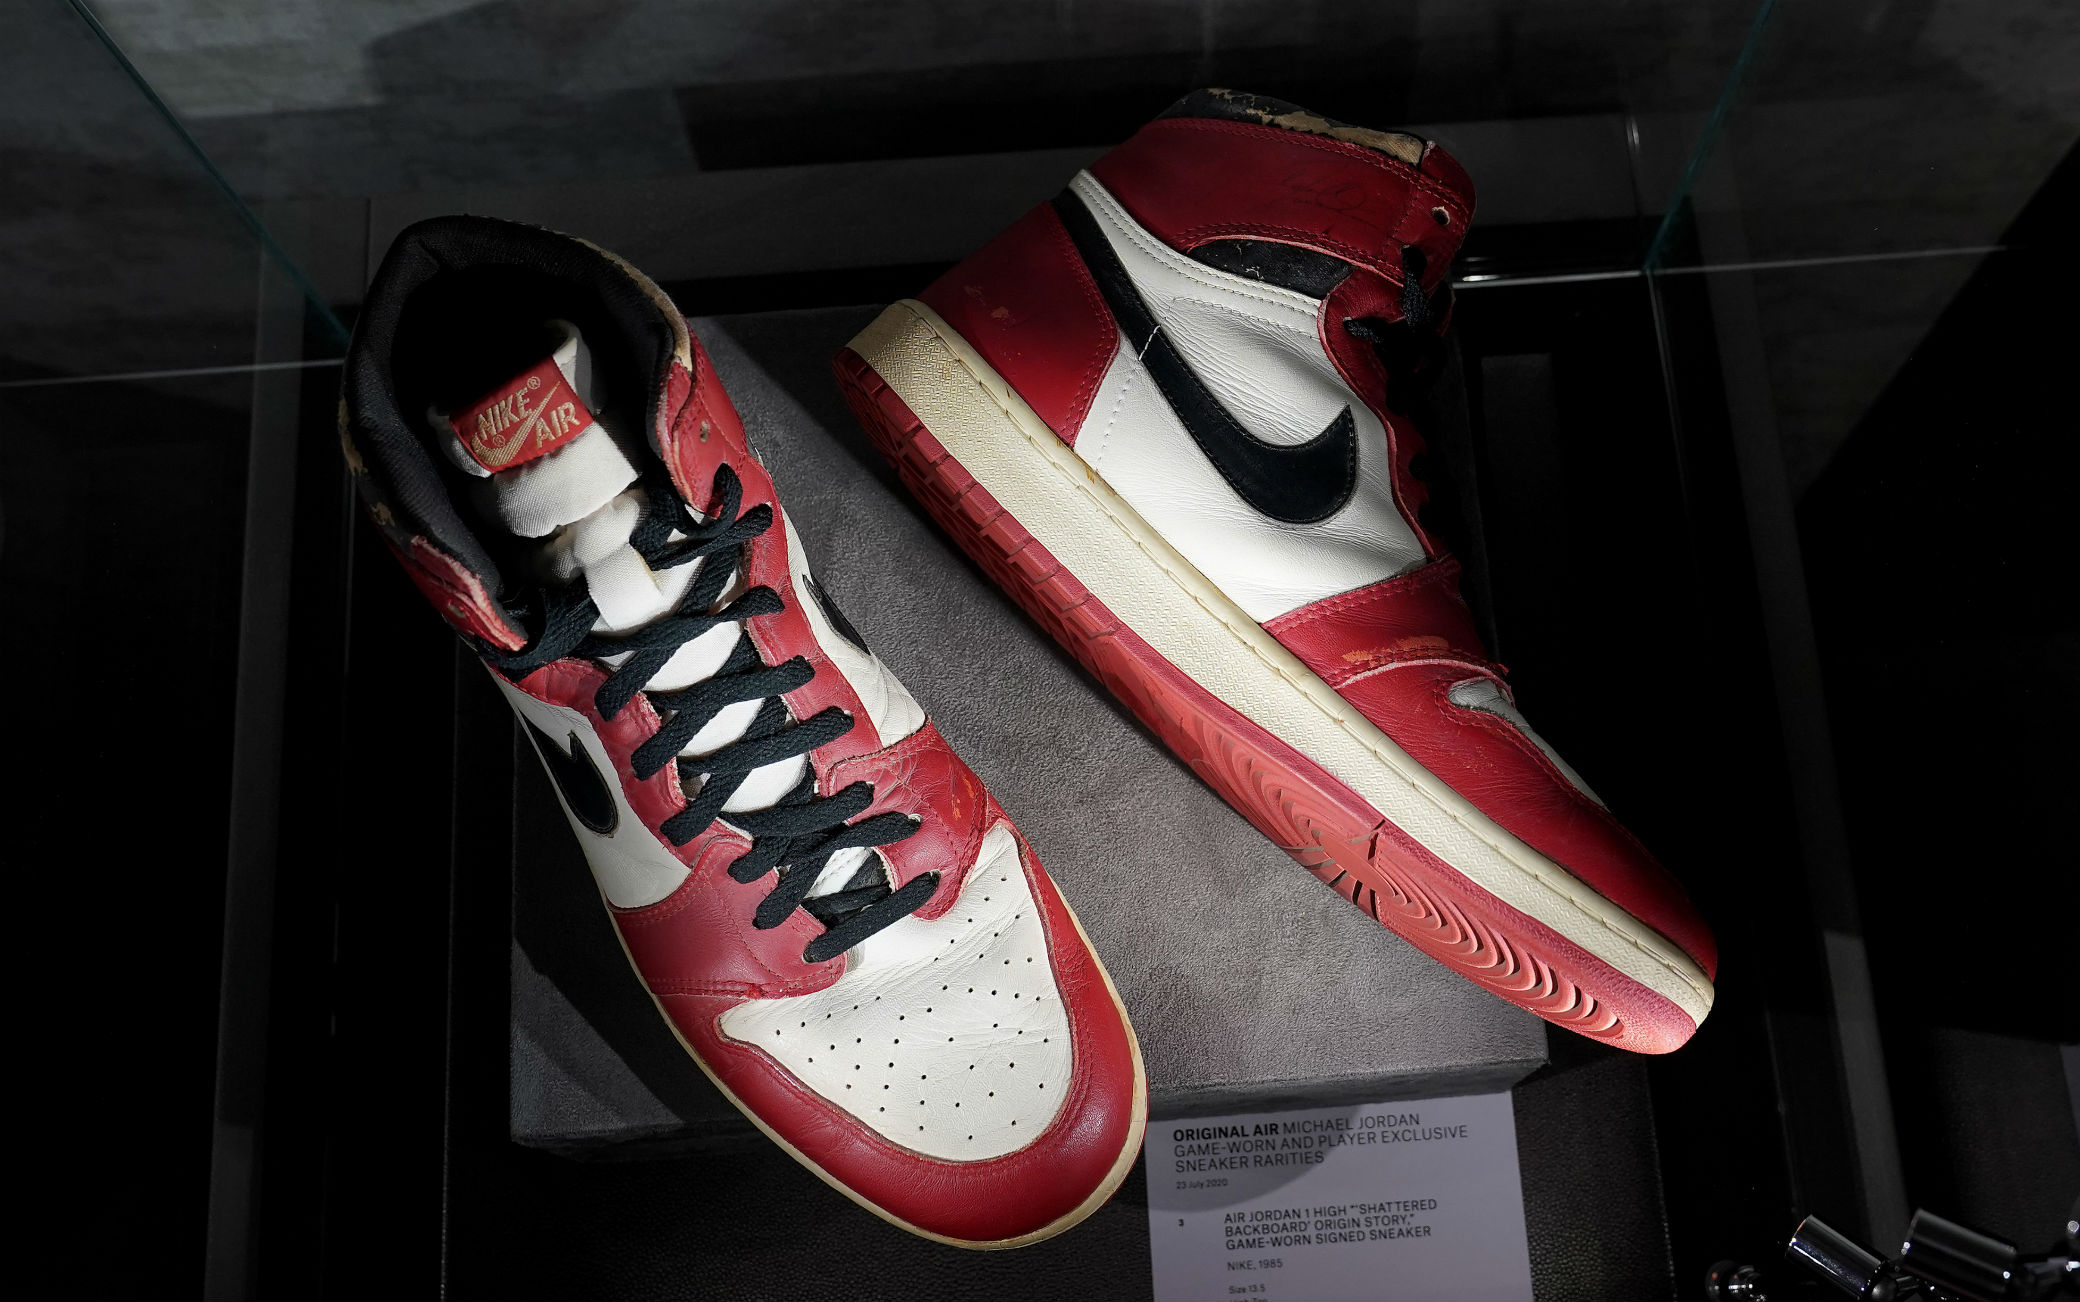 mrmlja psihološki medicinska sestra  Le scarpe di Michael Jordan usate a Trieste nel 1985 vendute all'asta per  615mila dollari